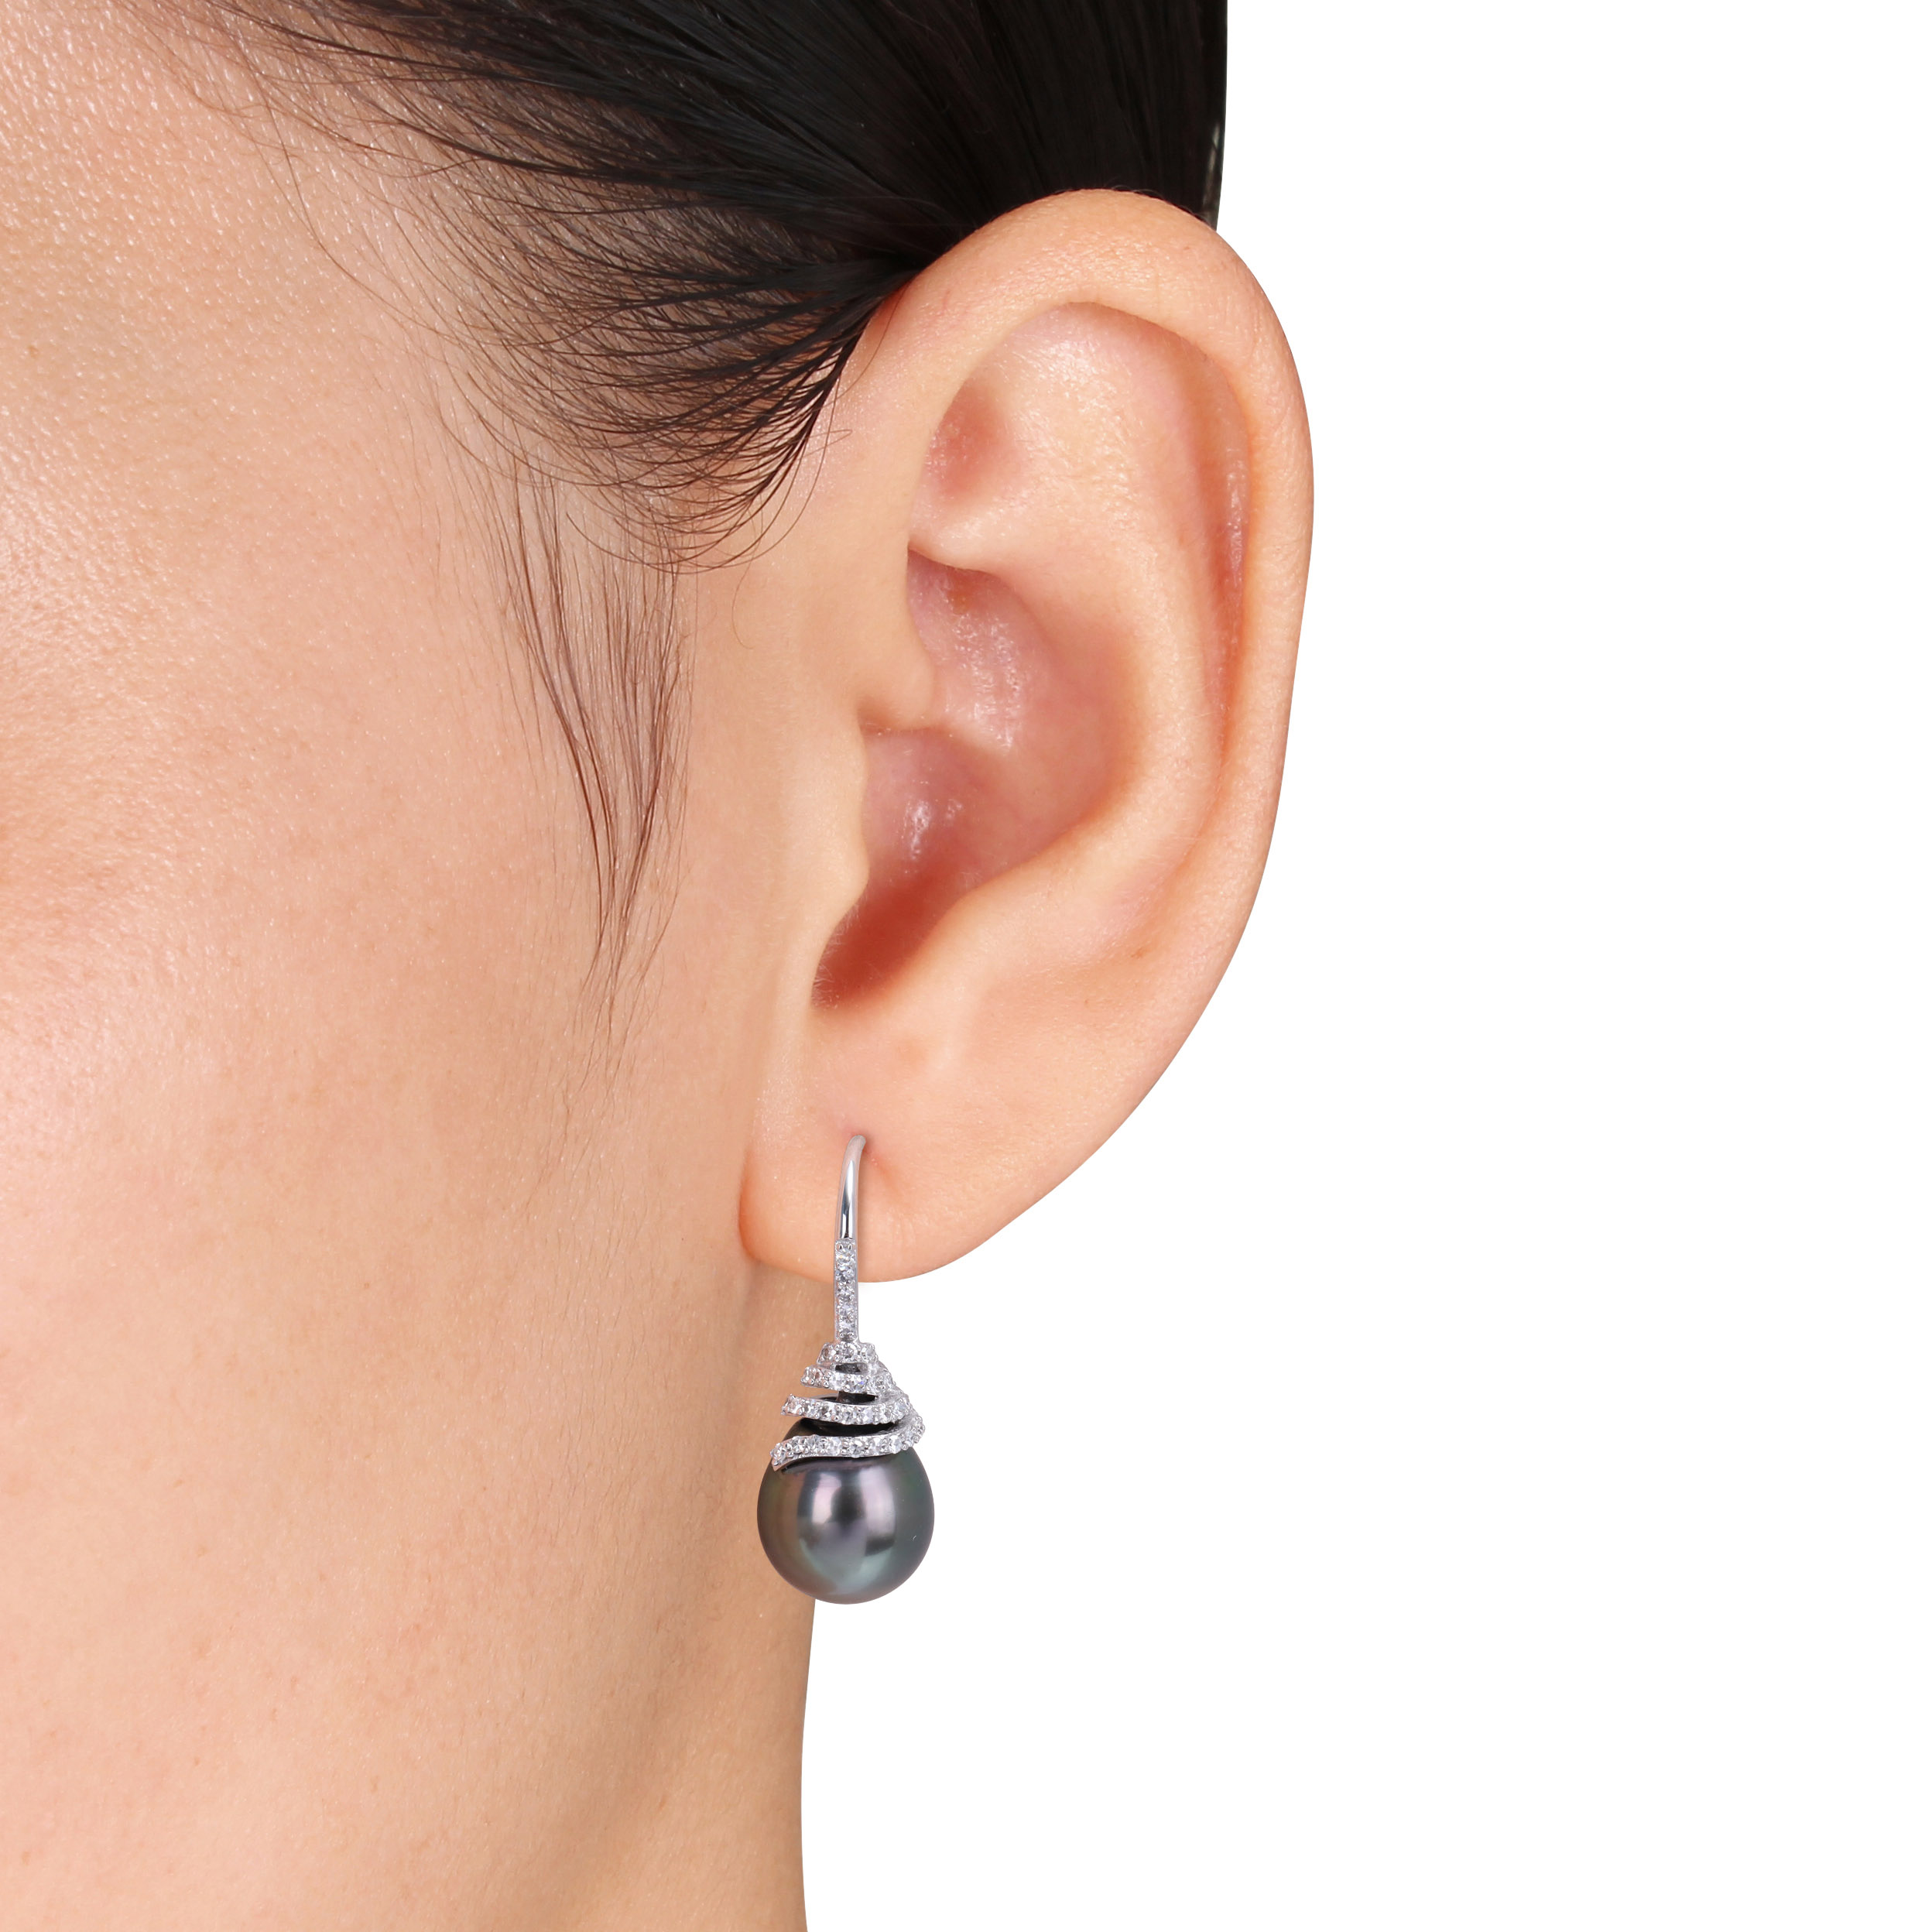 10-11 MM Black Tahitian Cultured Pearl and 1/3 CT TW Diamond Swirl Hook Earrings in 14k White Gold